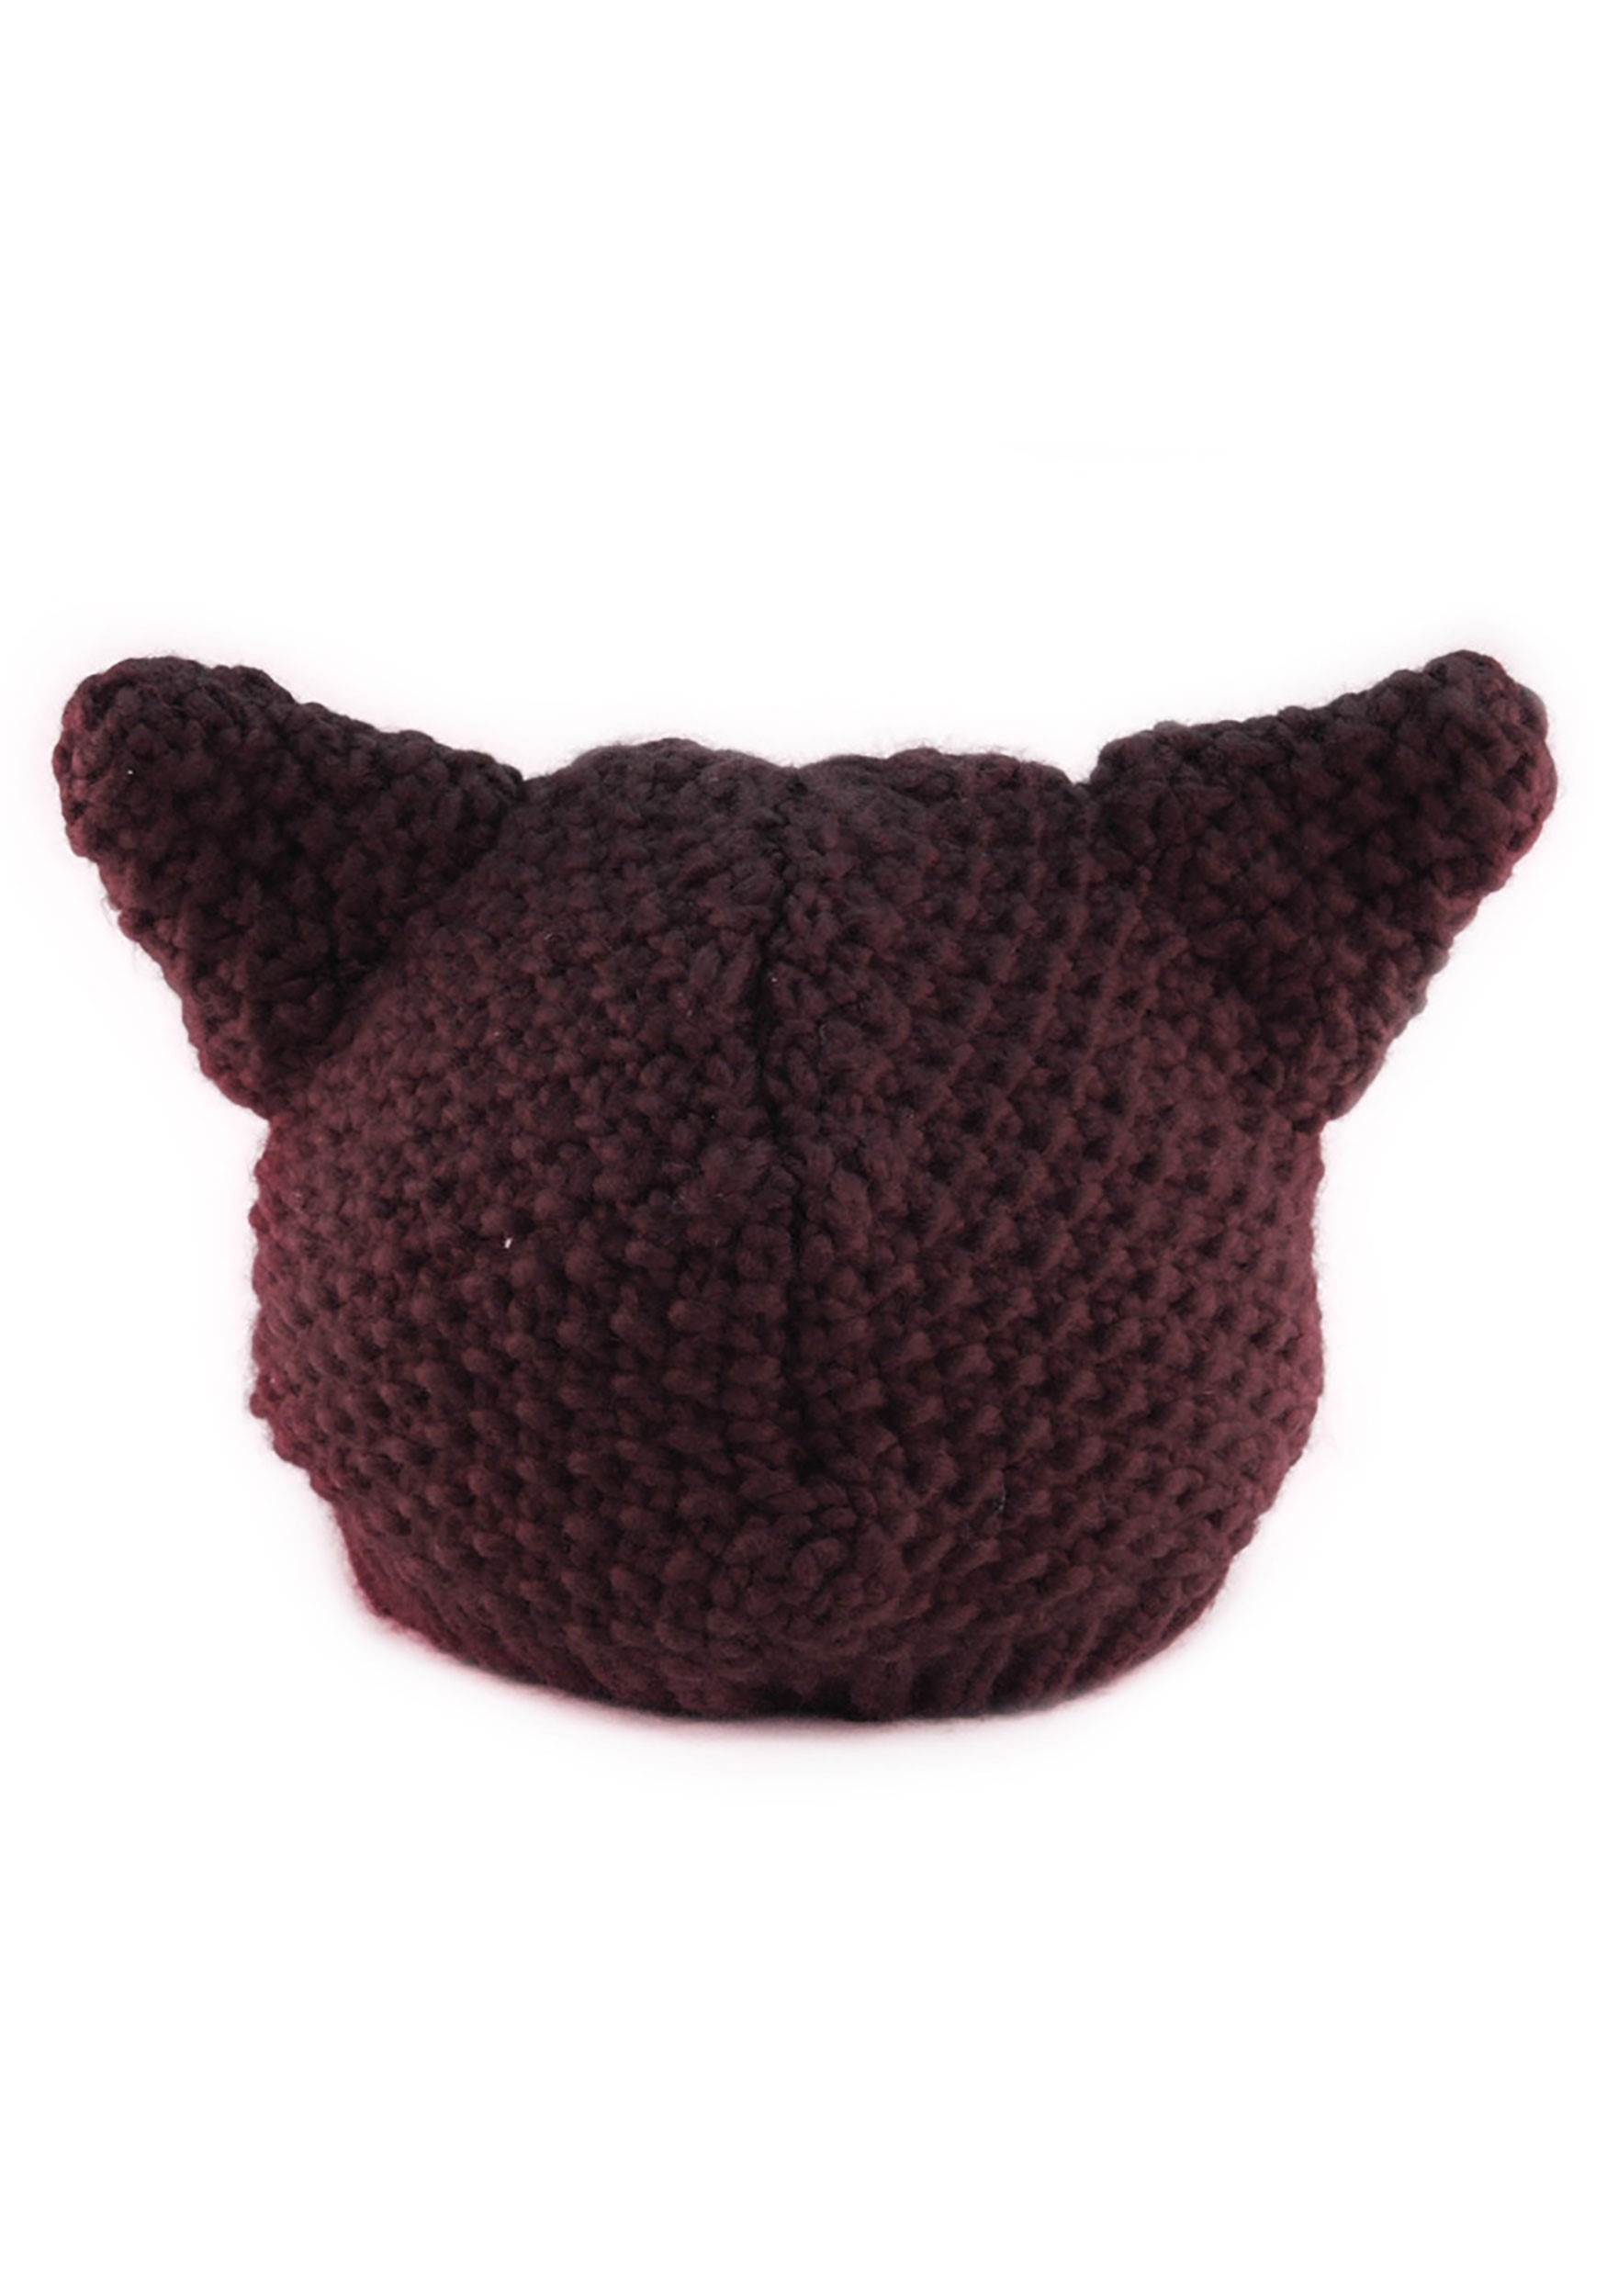 Cat Knit Beanie